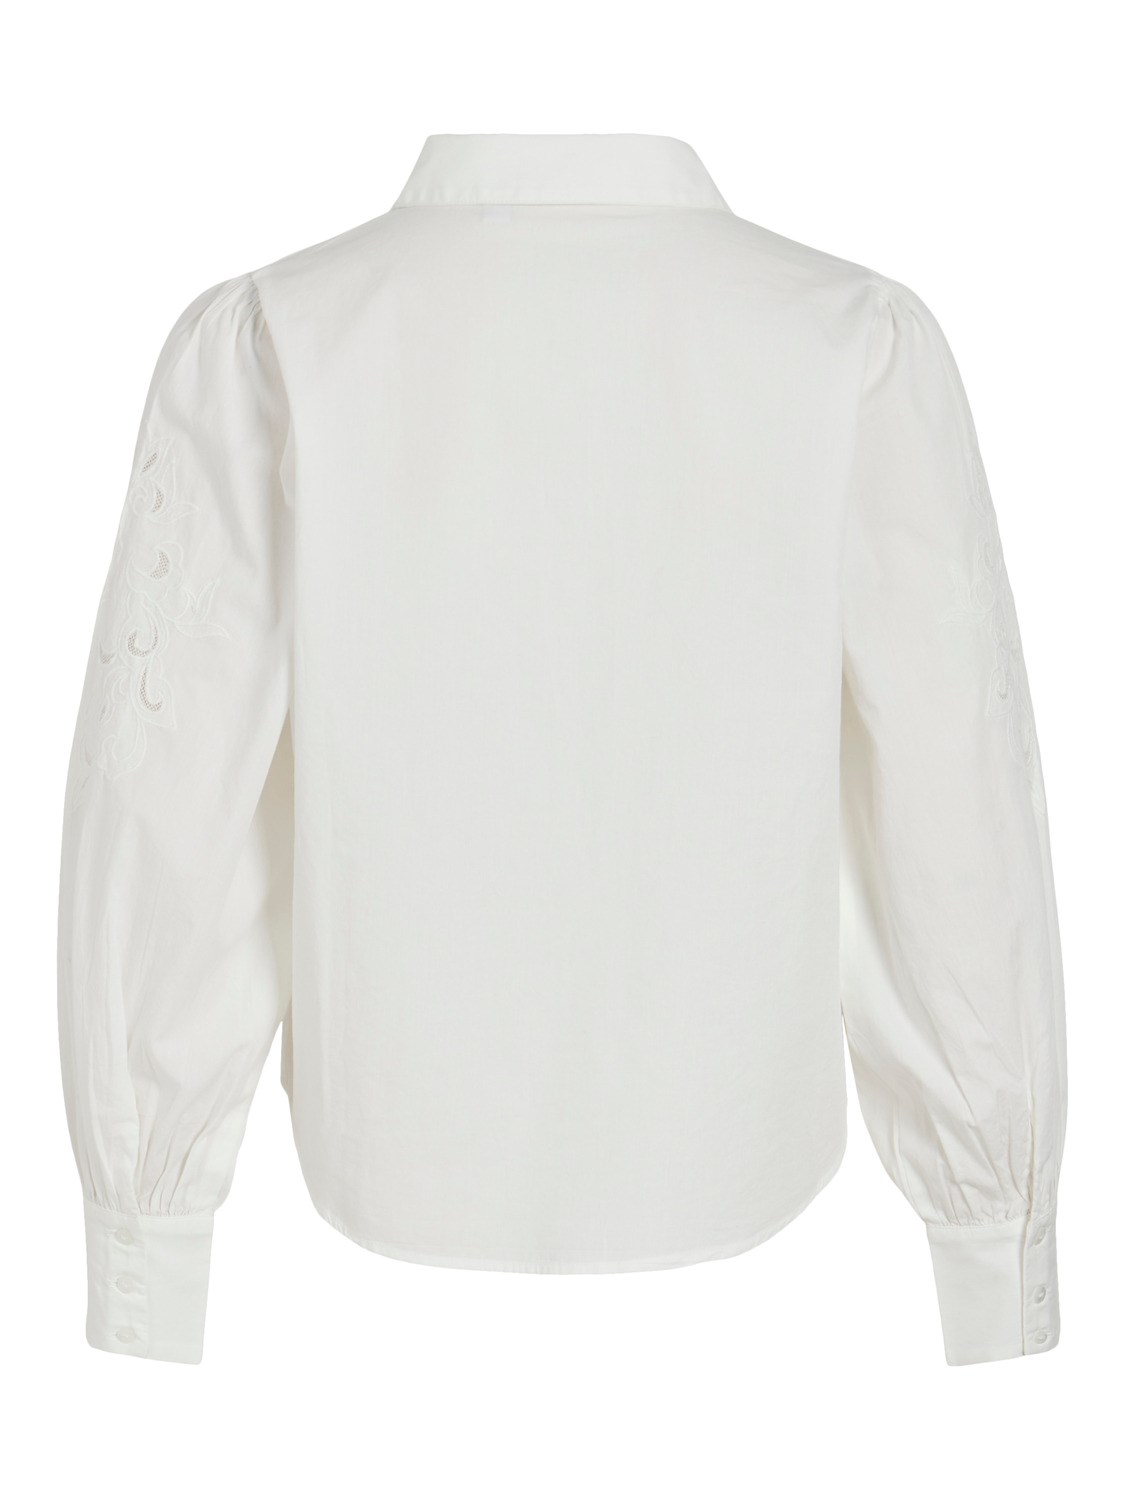 Camisa Node con mangas brocadas en color blanco. Modelo 14093574 de Vila.